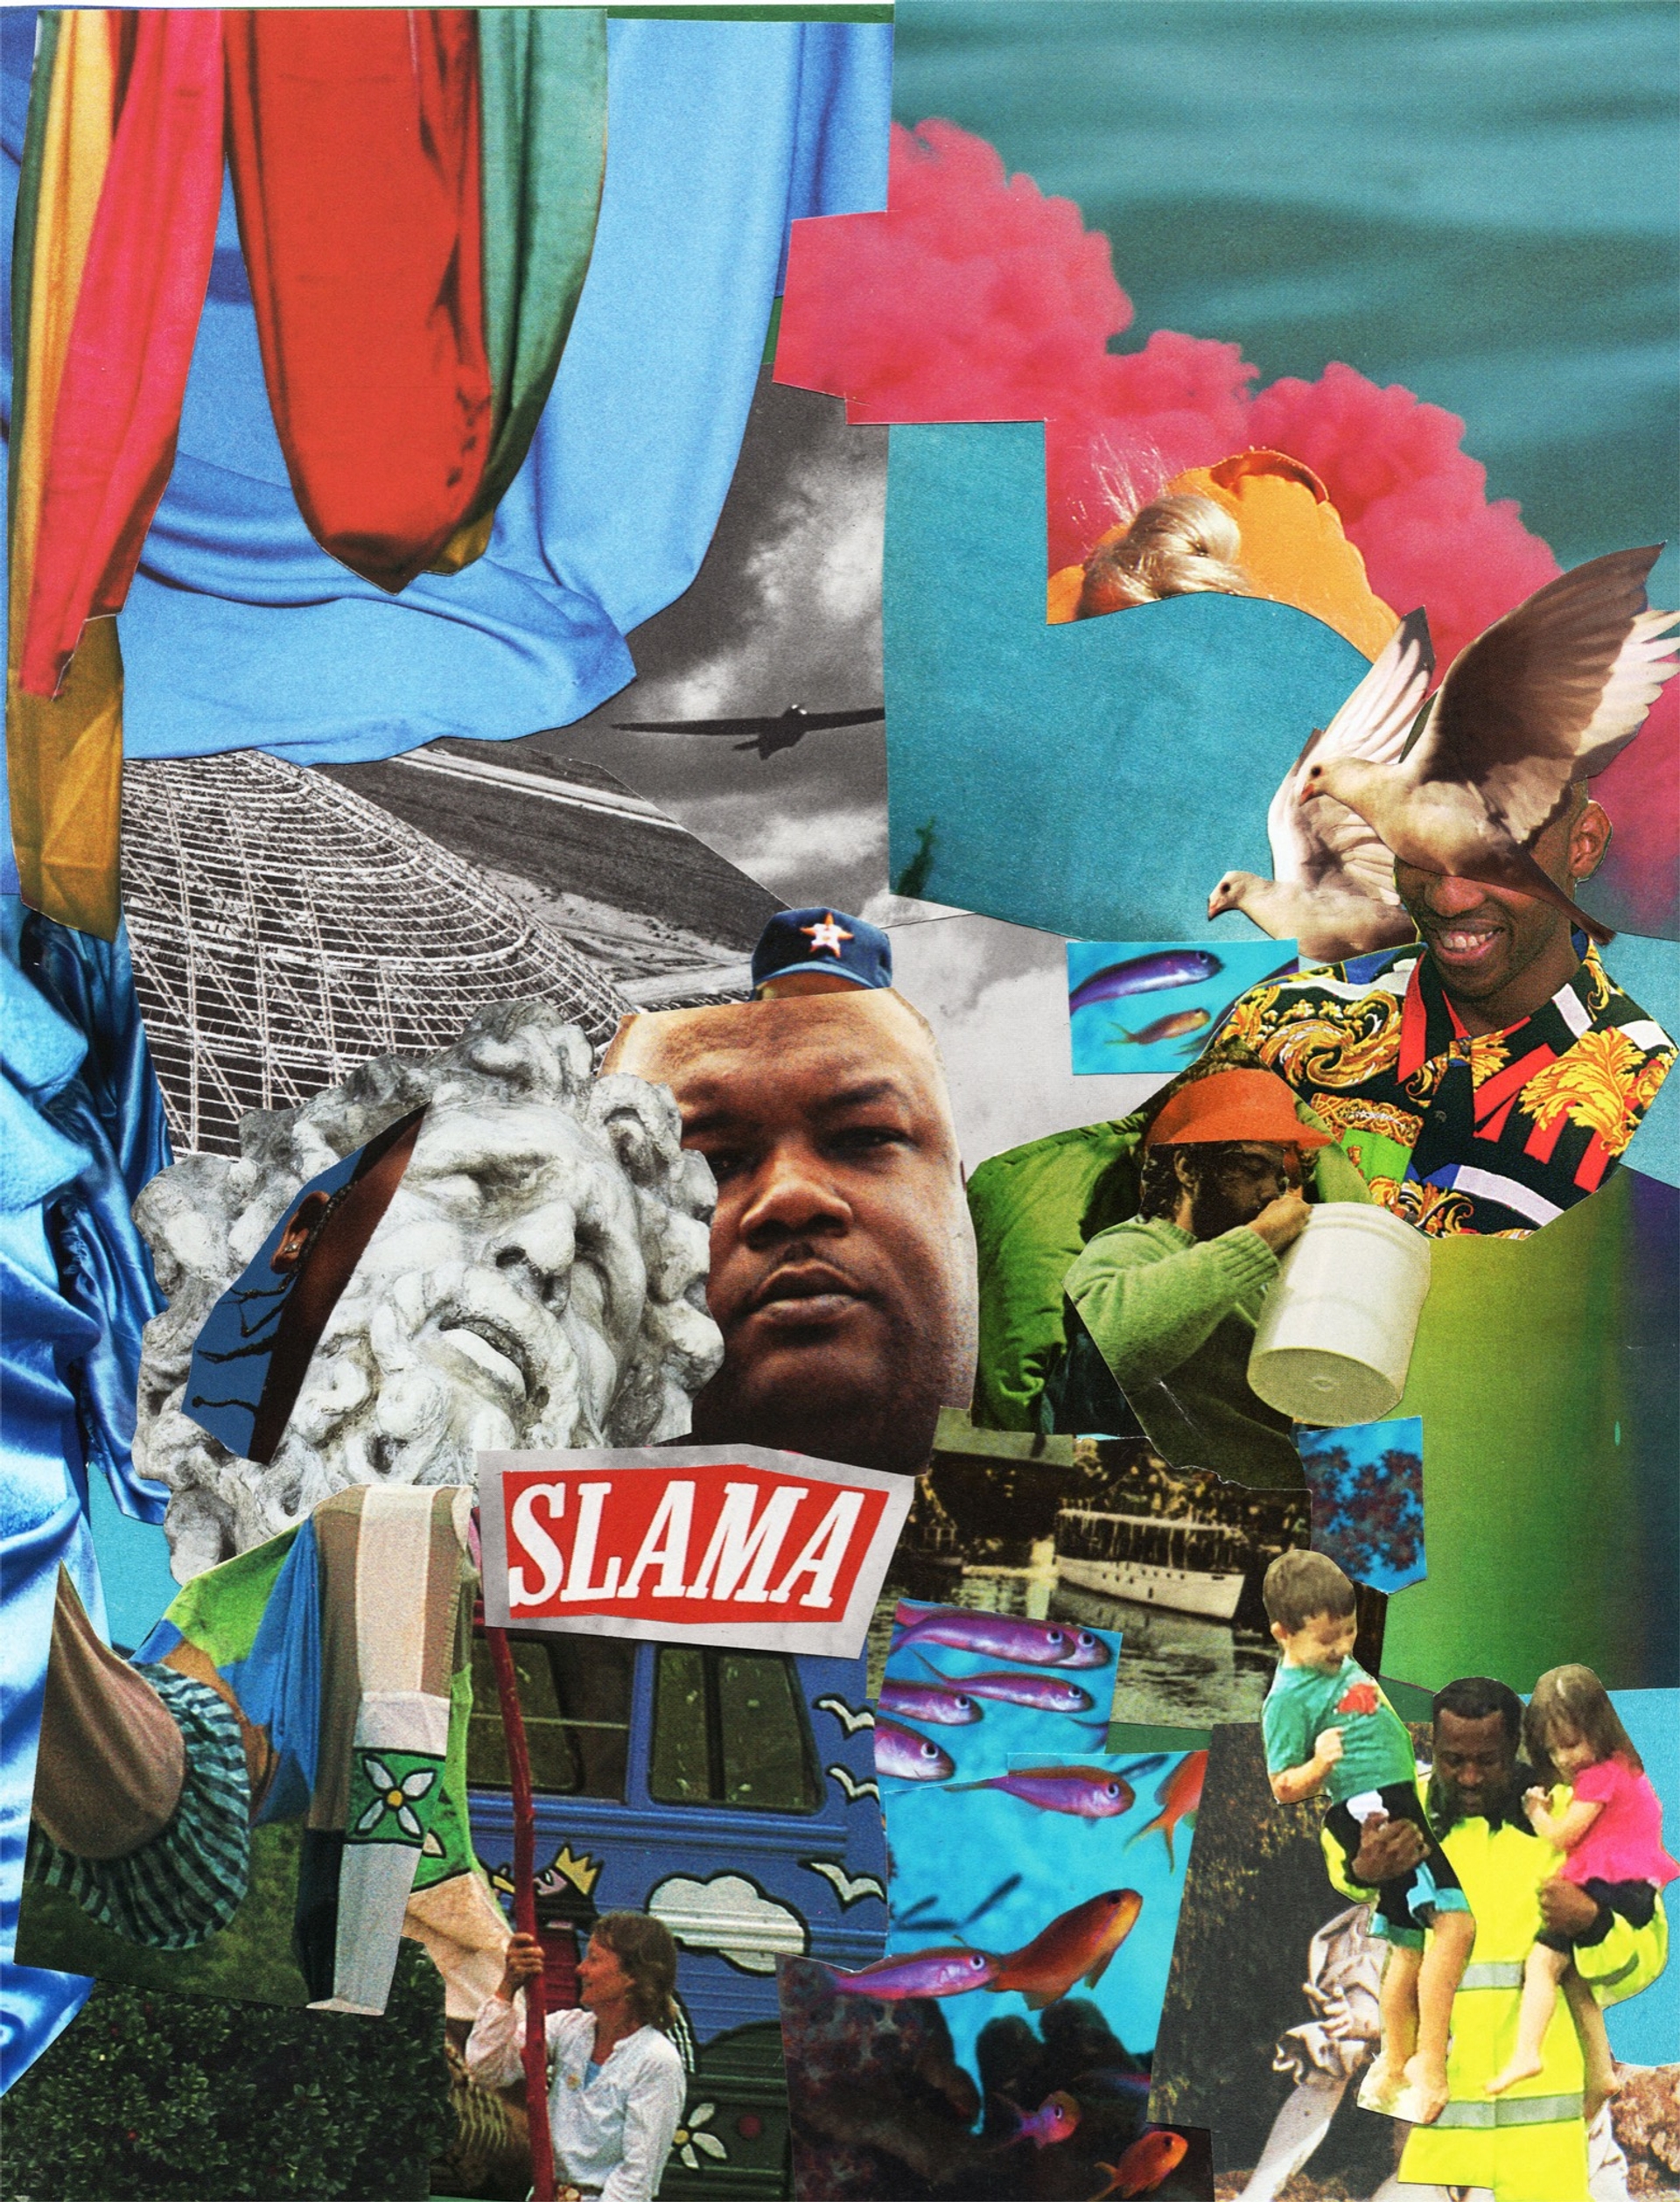 Tay Butler, "SLAMA", 2020. Digital collage. Courtesy of the artist